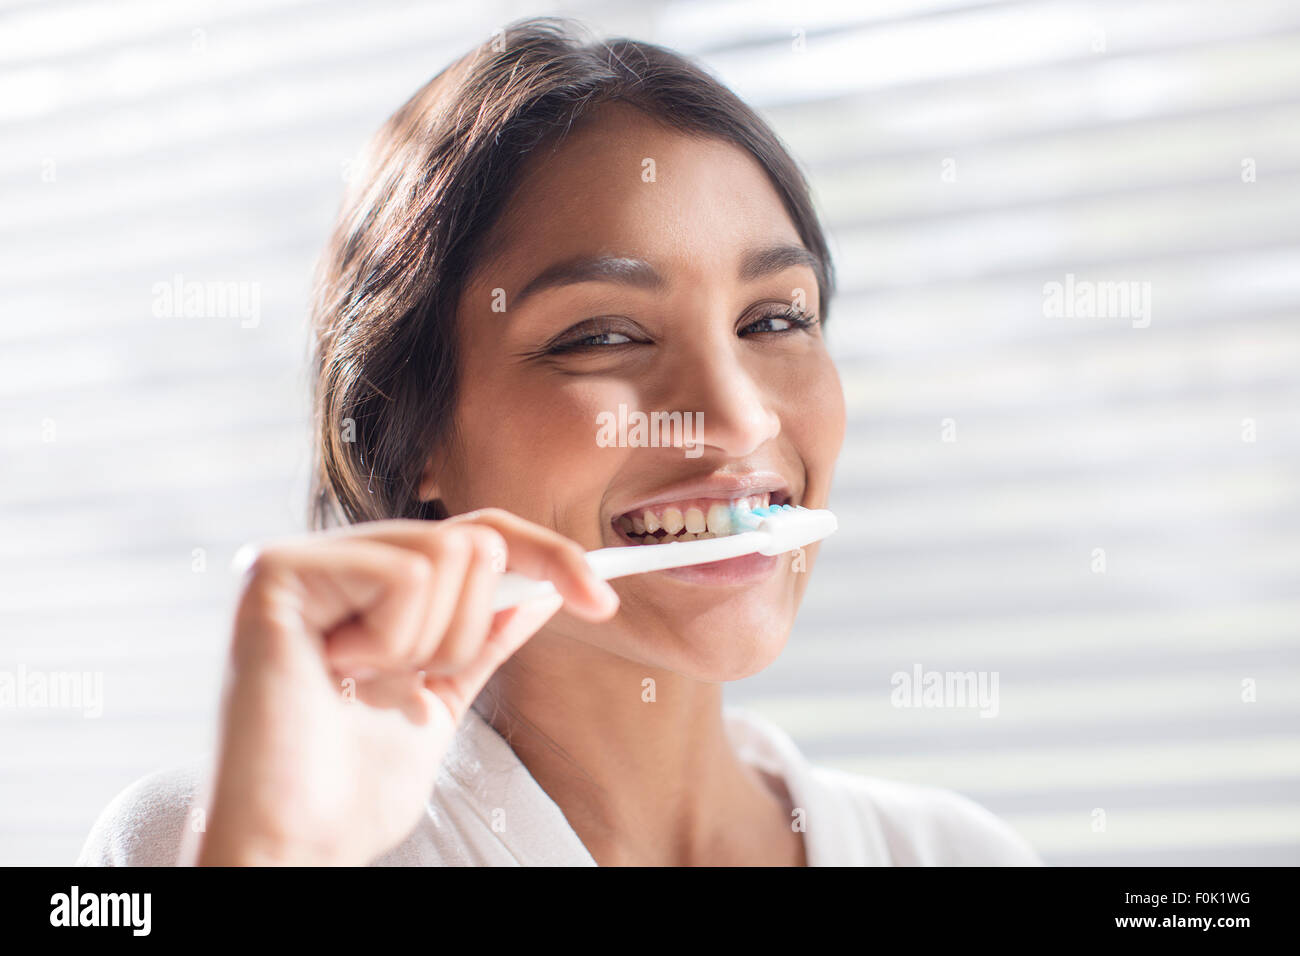 Close up portrait smiling woman brushing teeth Stock Photo